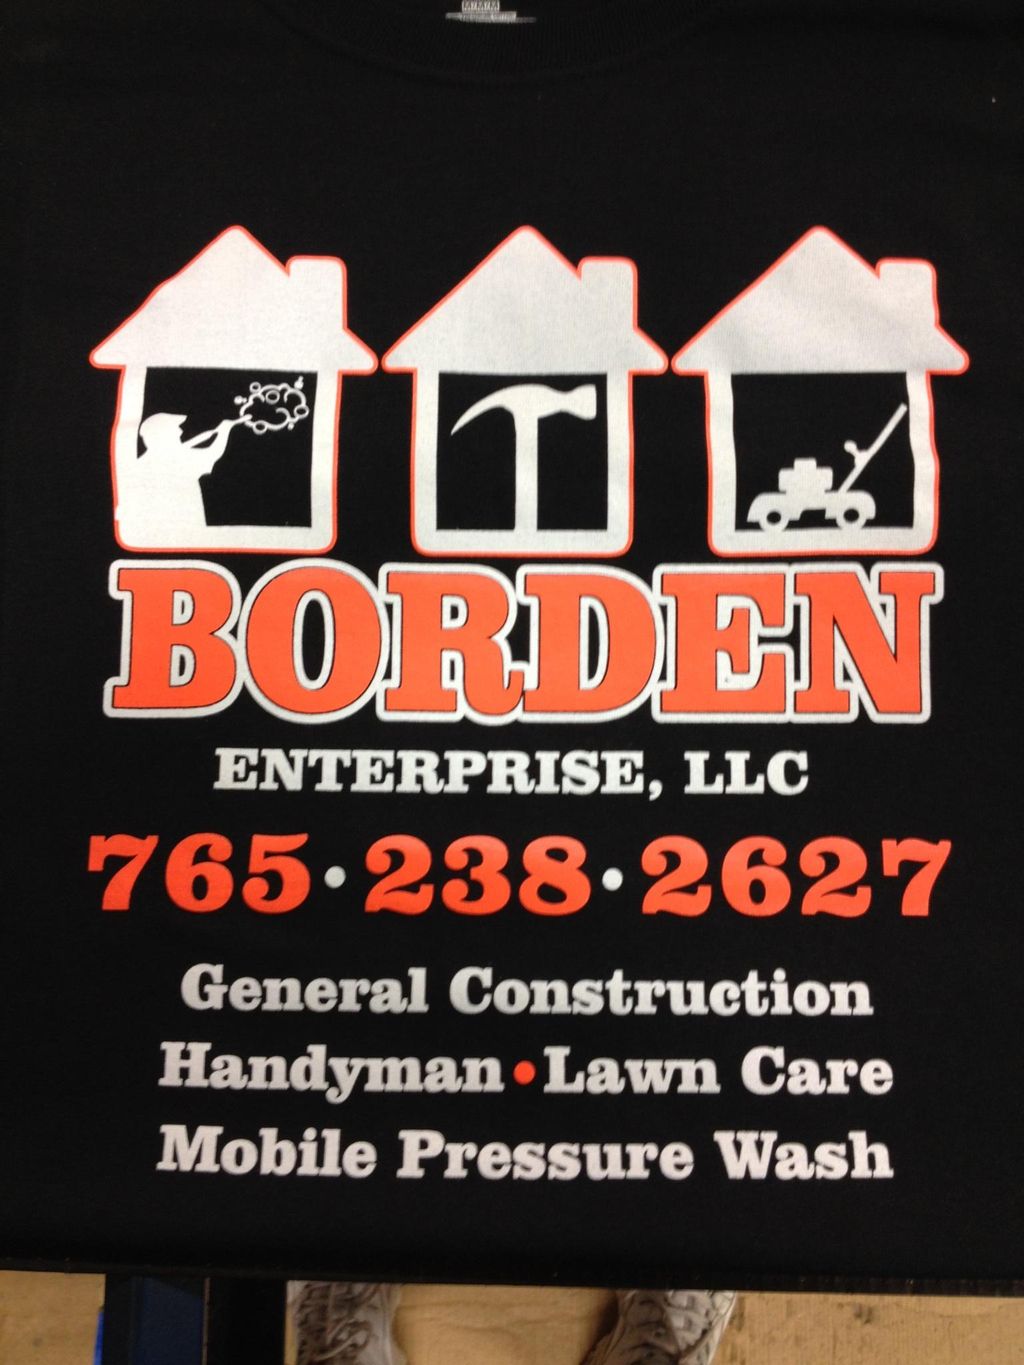 Borden Enterprises LLC